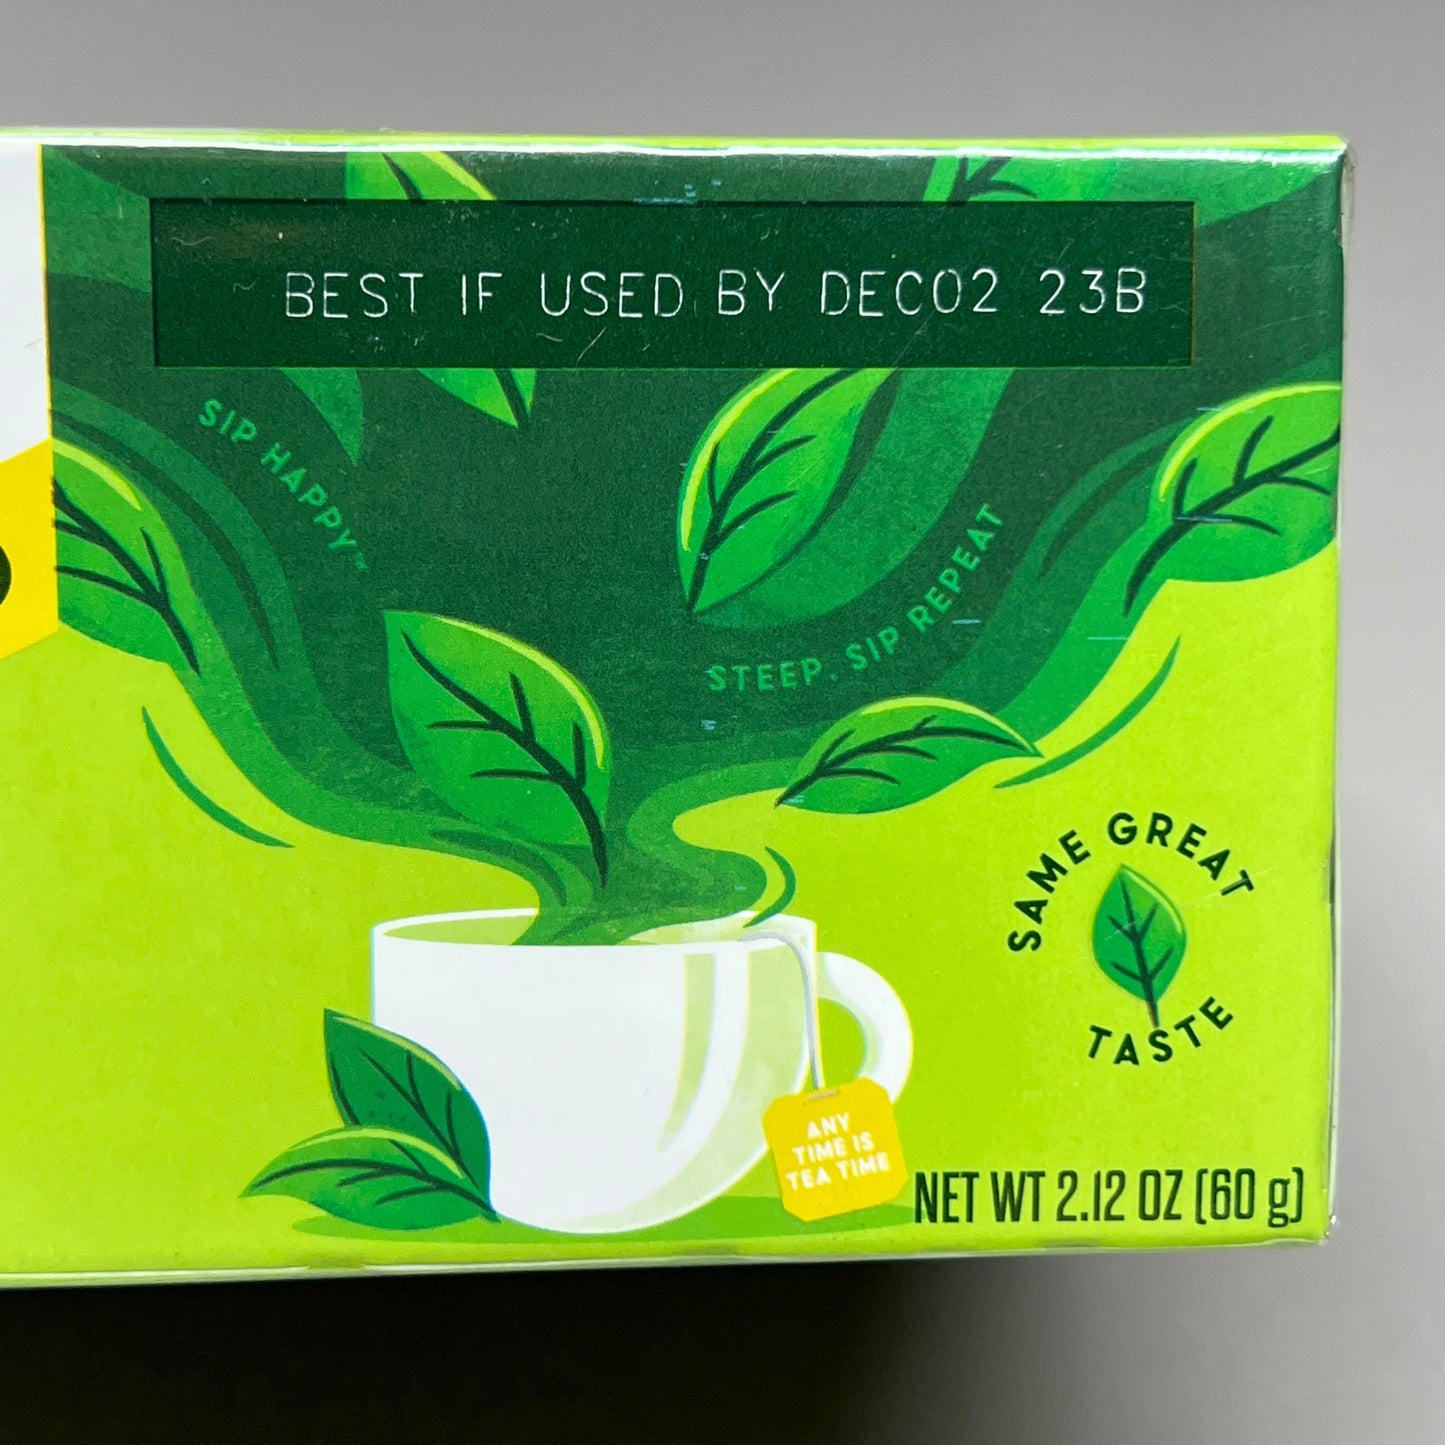 ZA@ SALADA Decaffeinated Classic Green Tea 40 Count Bags BB Dec 2023 (AS-IS) H